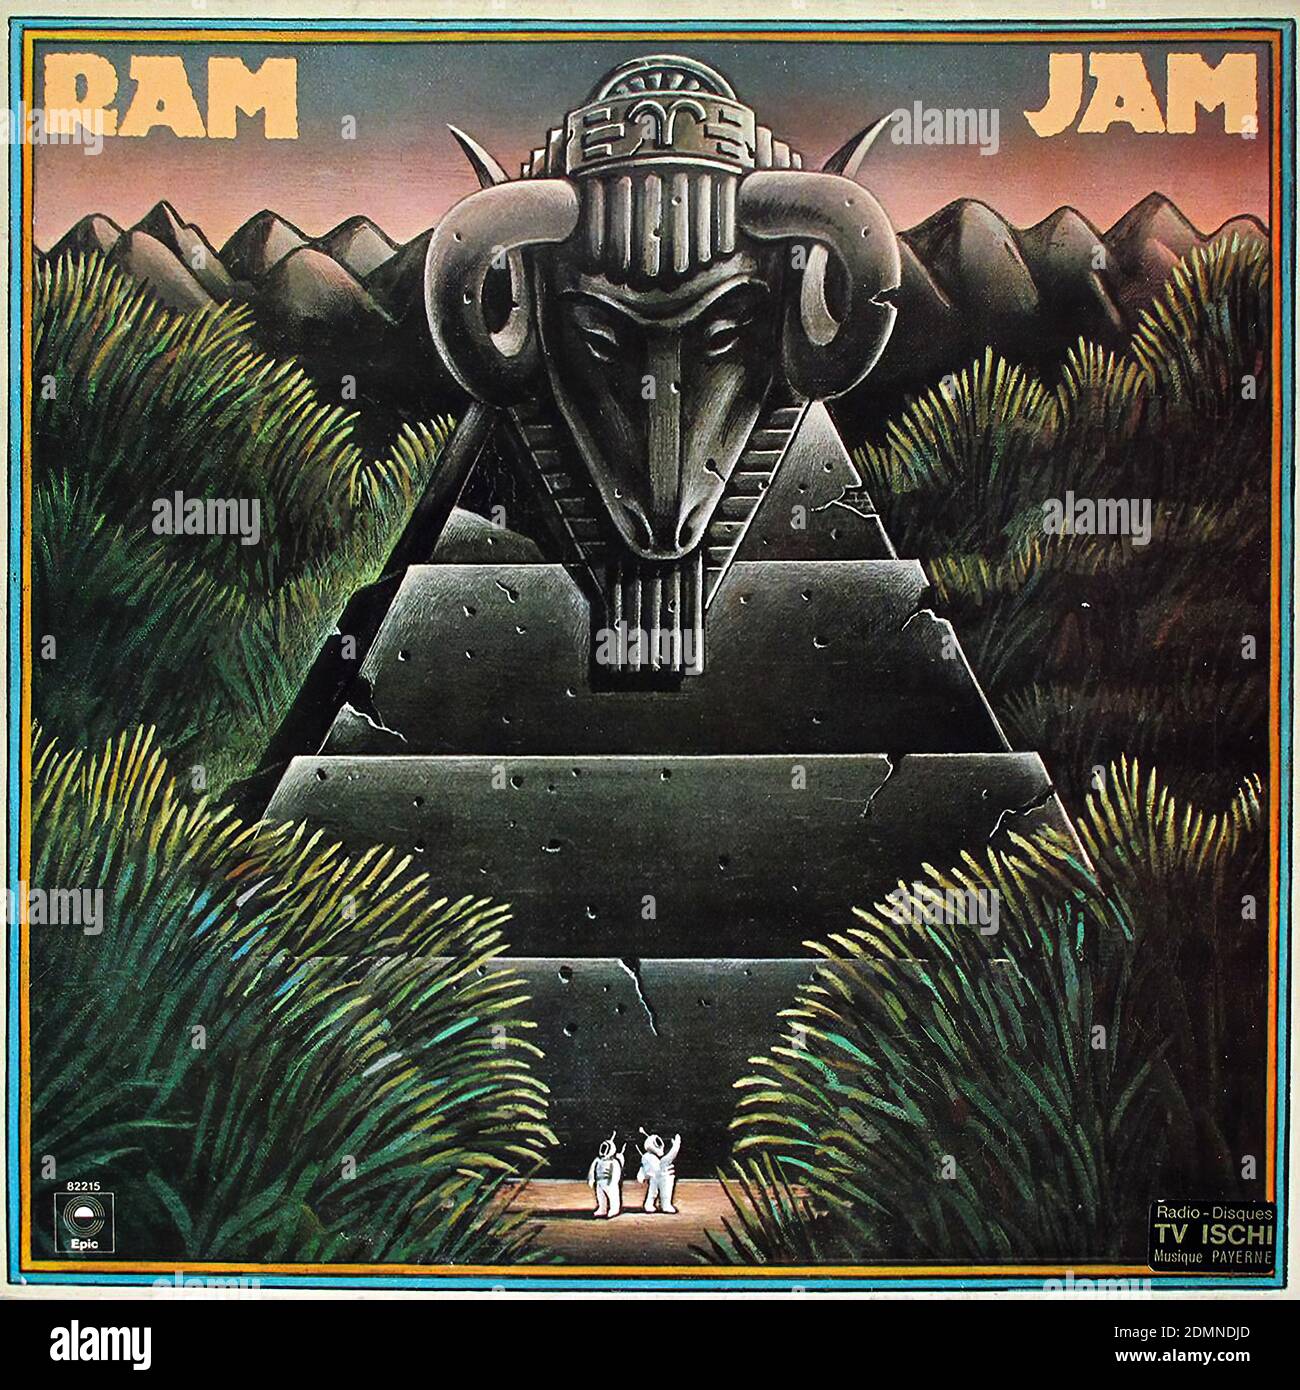 RAM JAM SELF TITLED BLACK BETTY 12 LP - Vintage Vinyl Record Cover Stock  Photo - Alamy